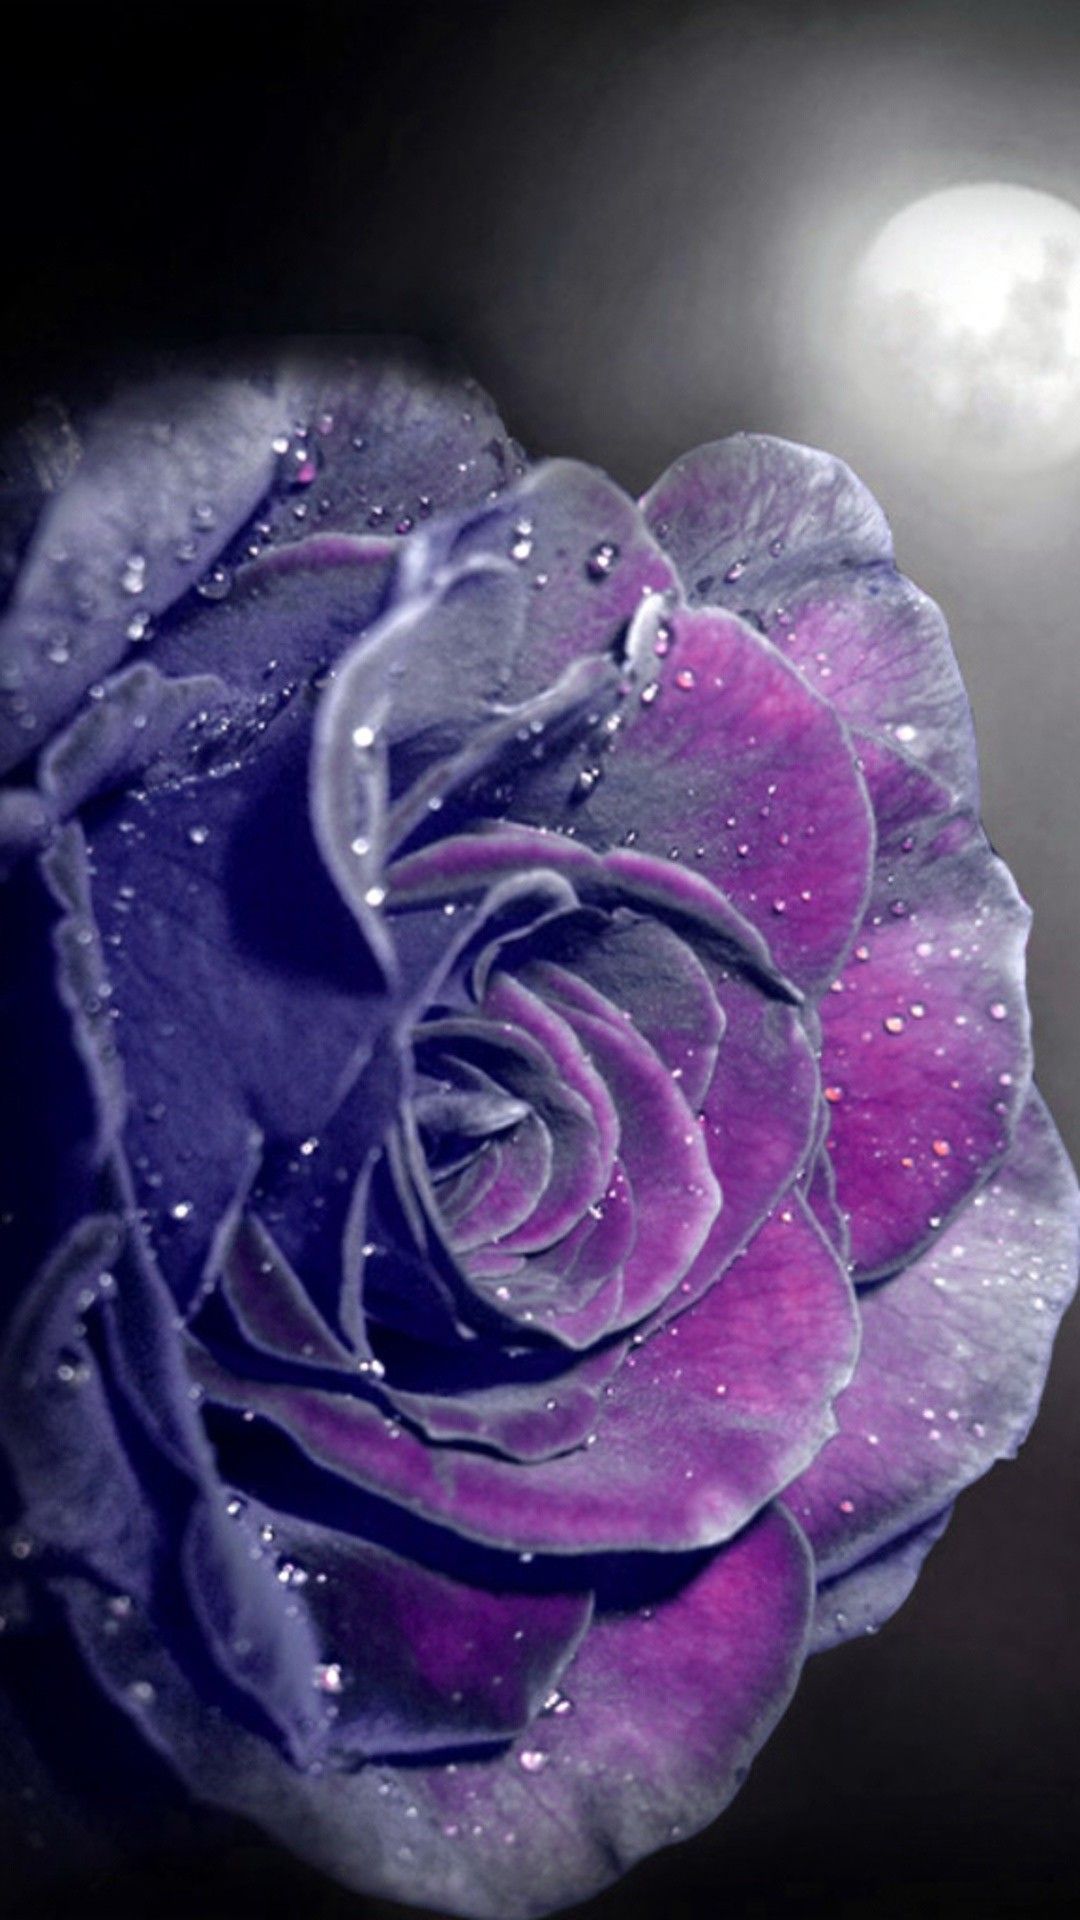 Purple Rose Wallpaper iPhone Best HD Roses